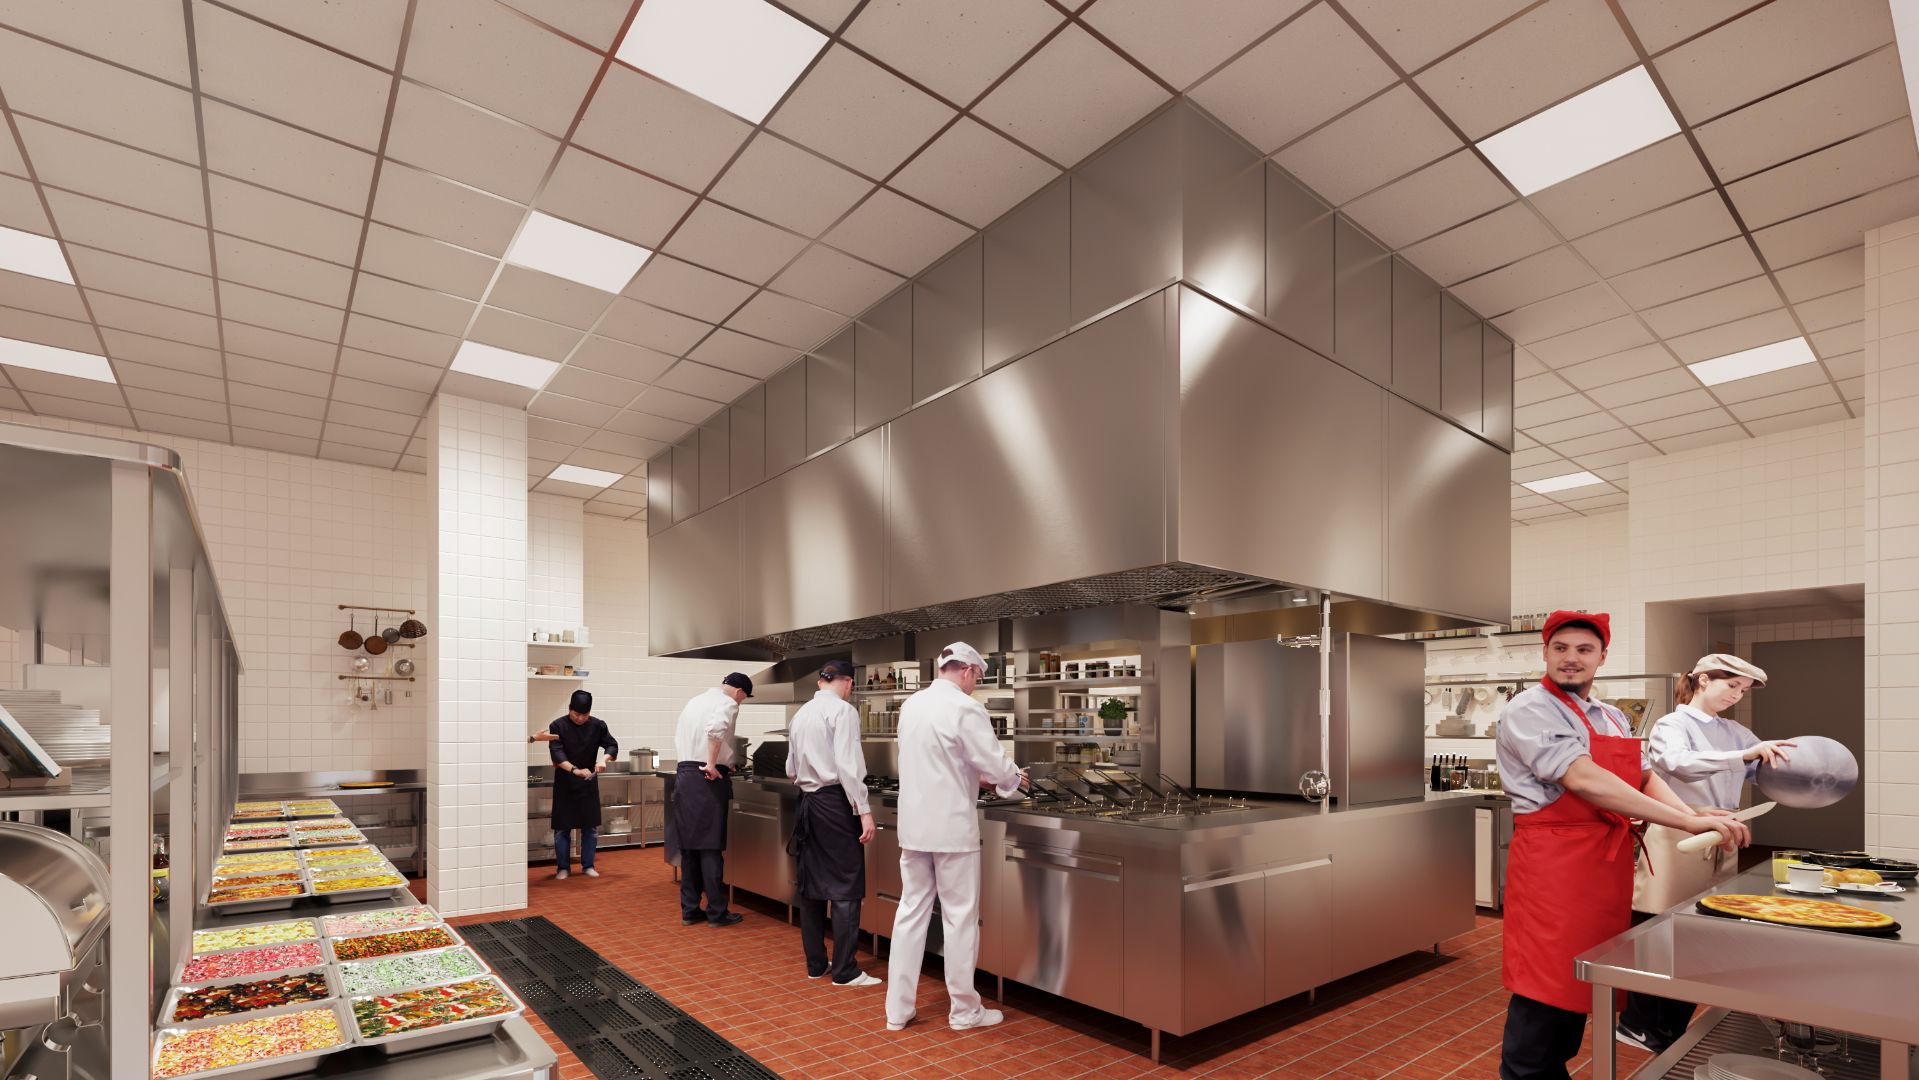 Coronado restaurant kitchen 3d interior rendering